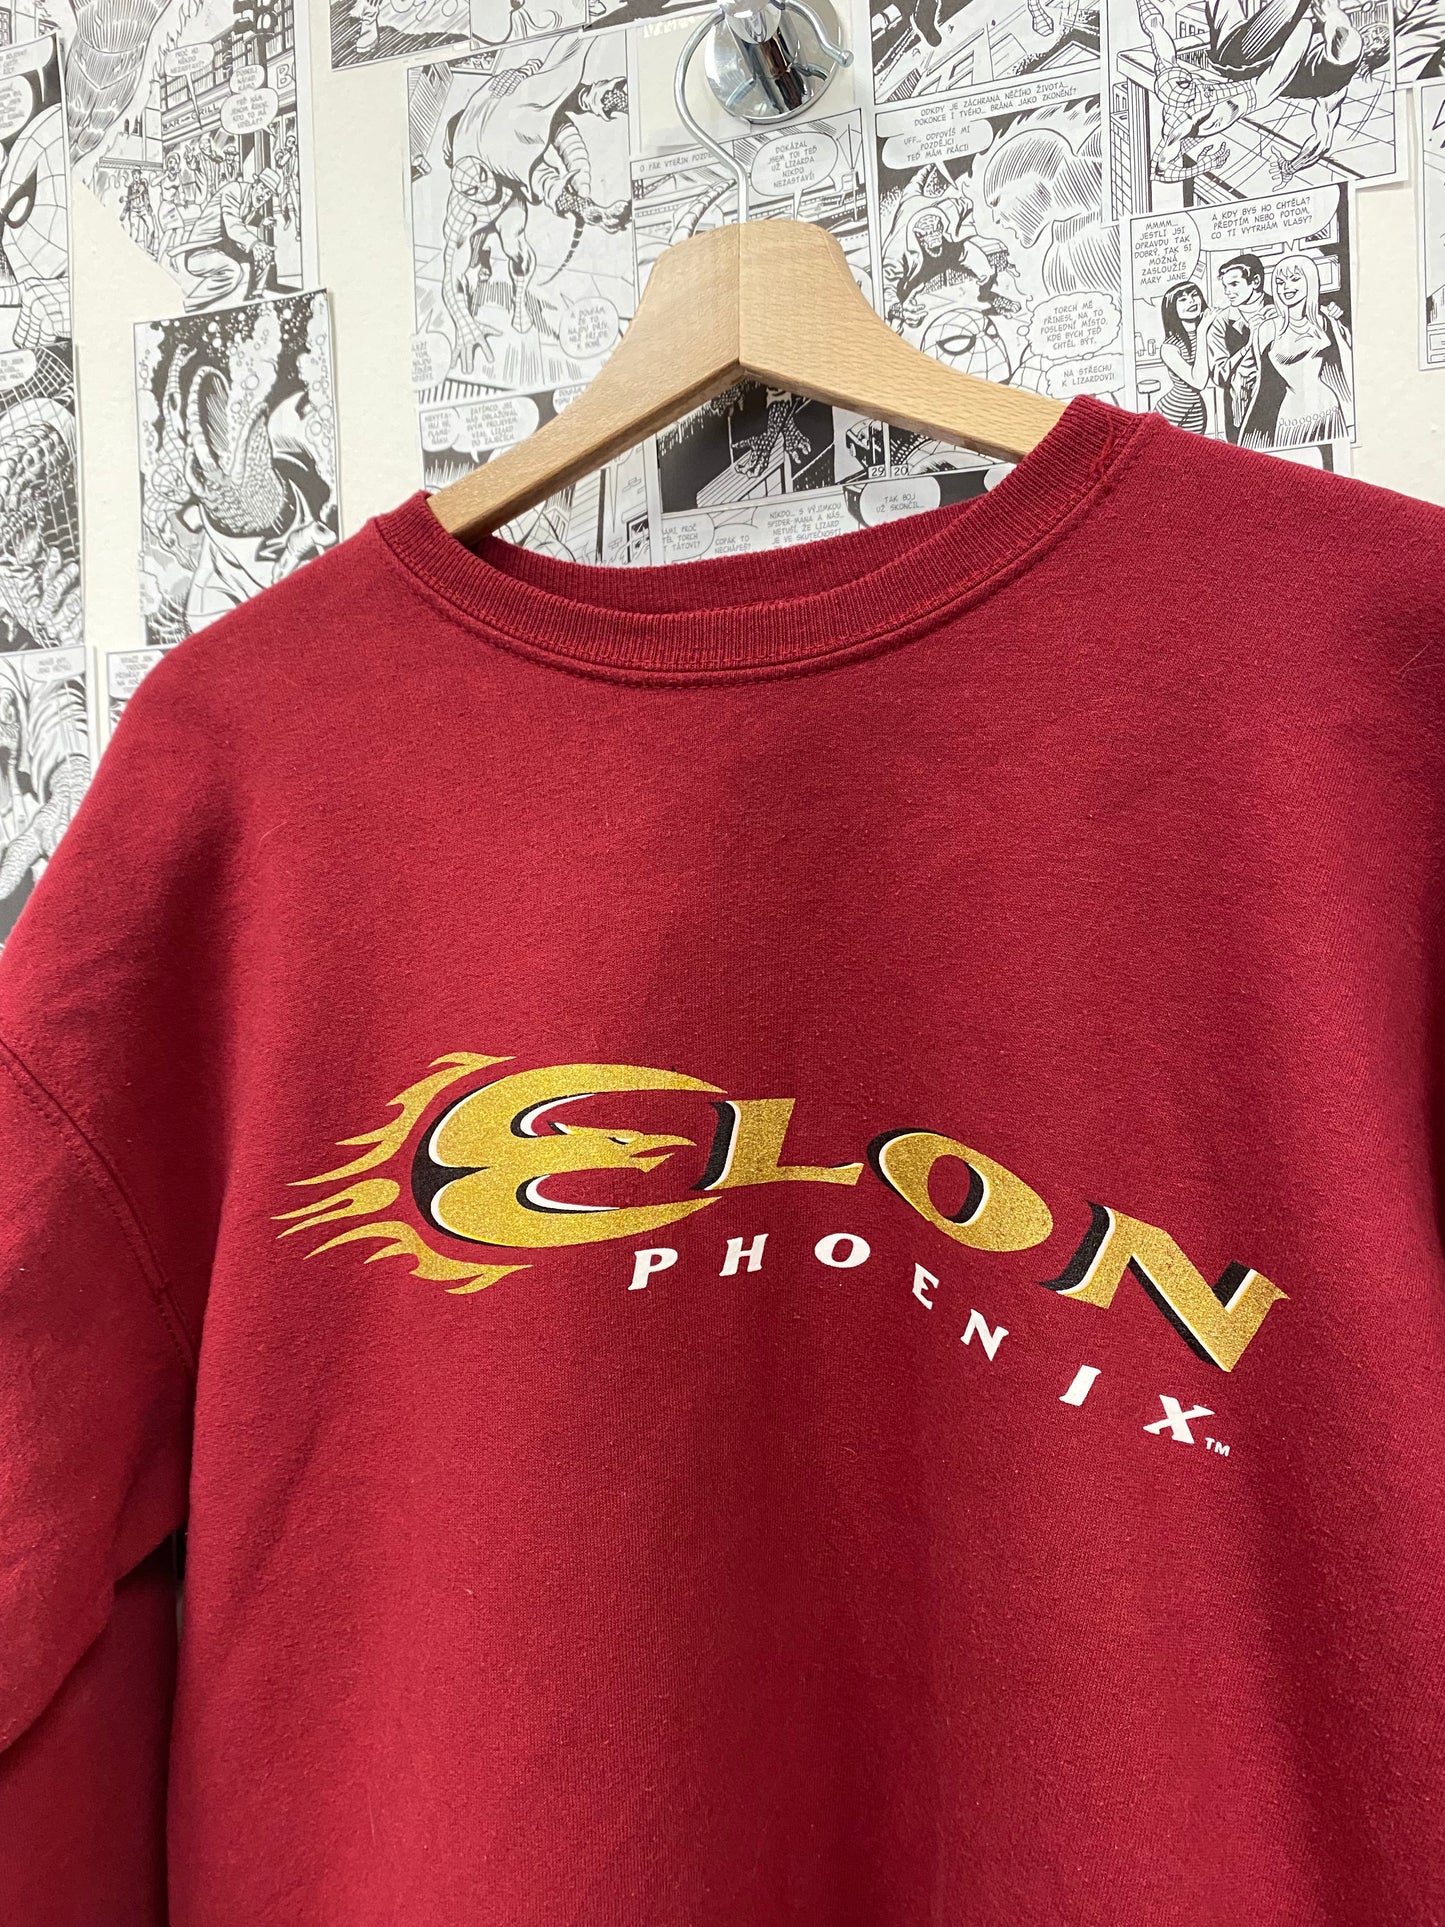 Vintage Elon Phoenix 90s crewneck - size M